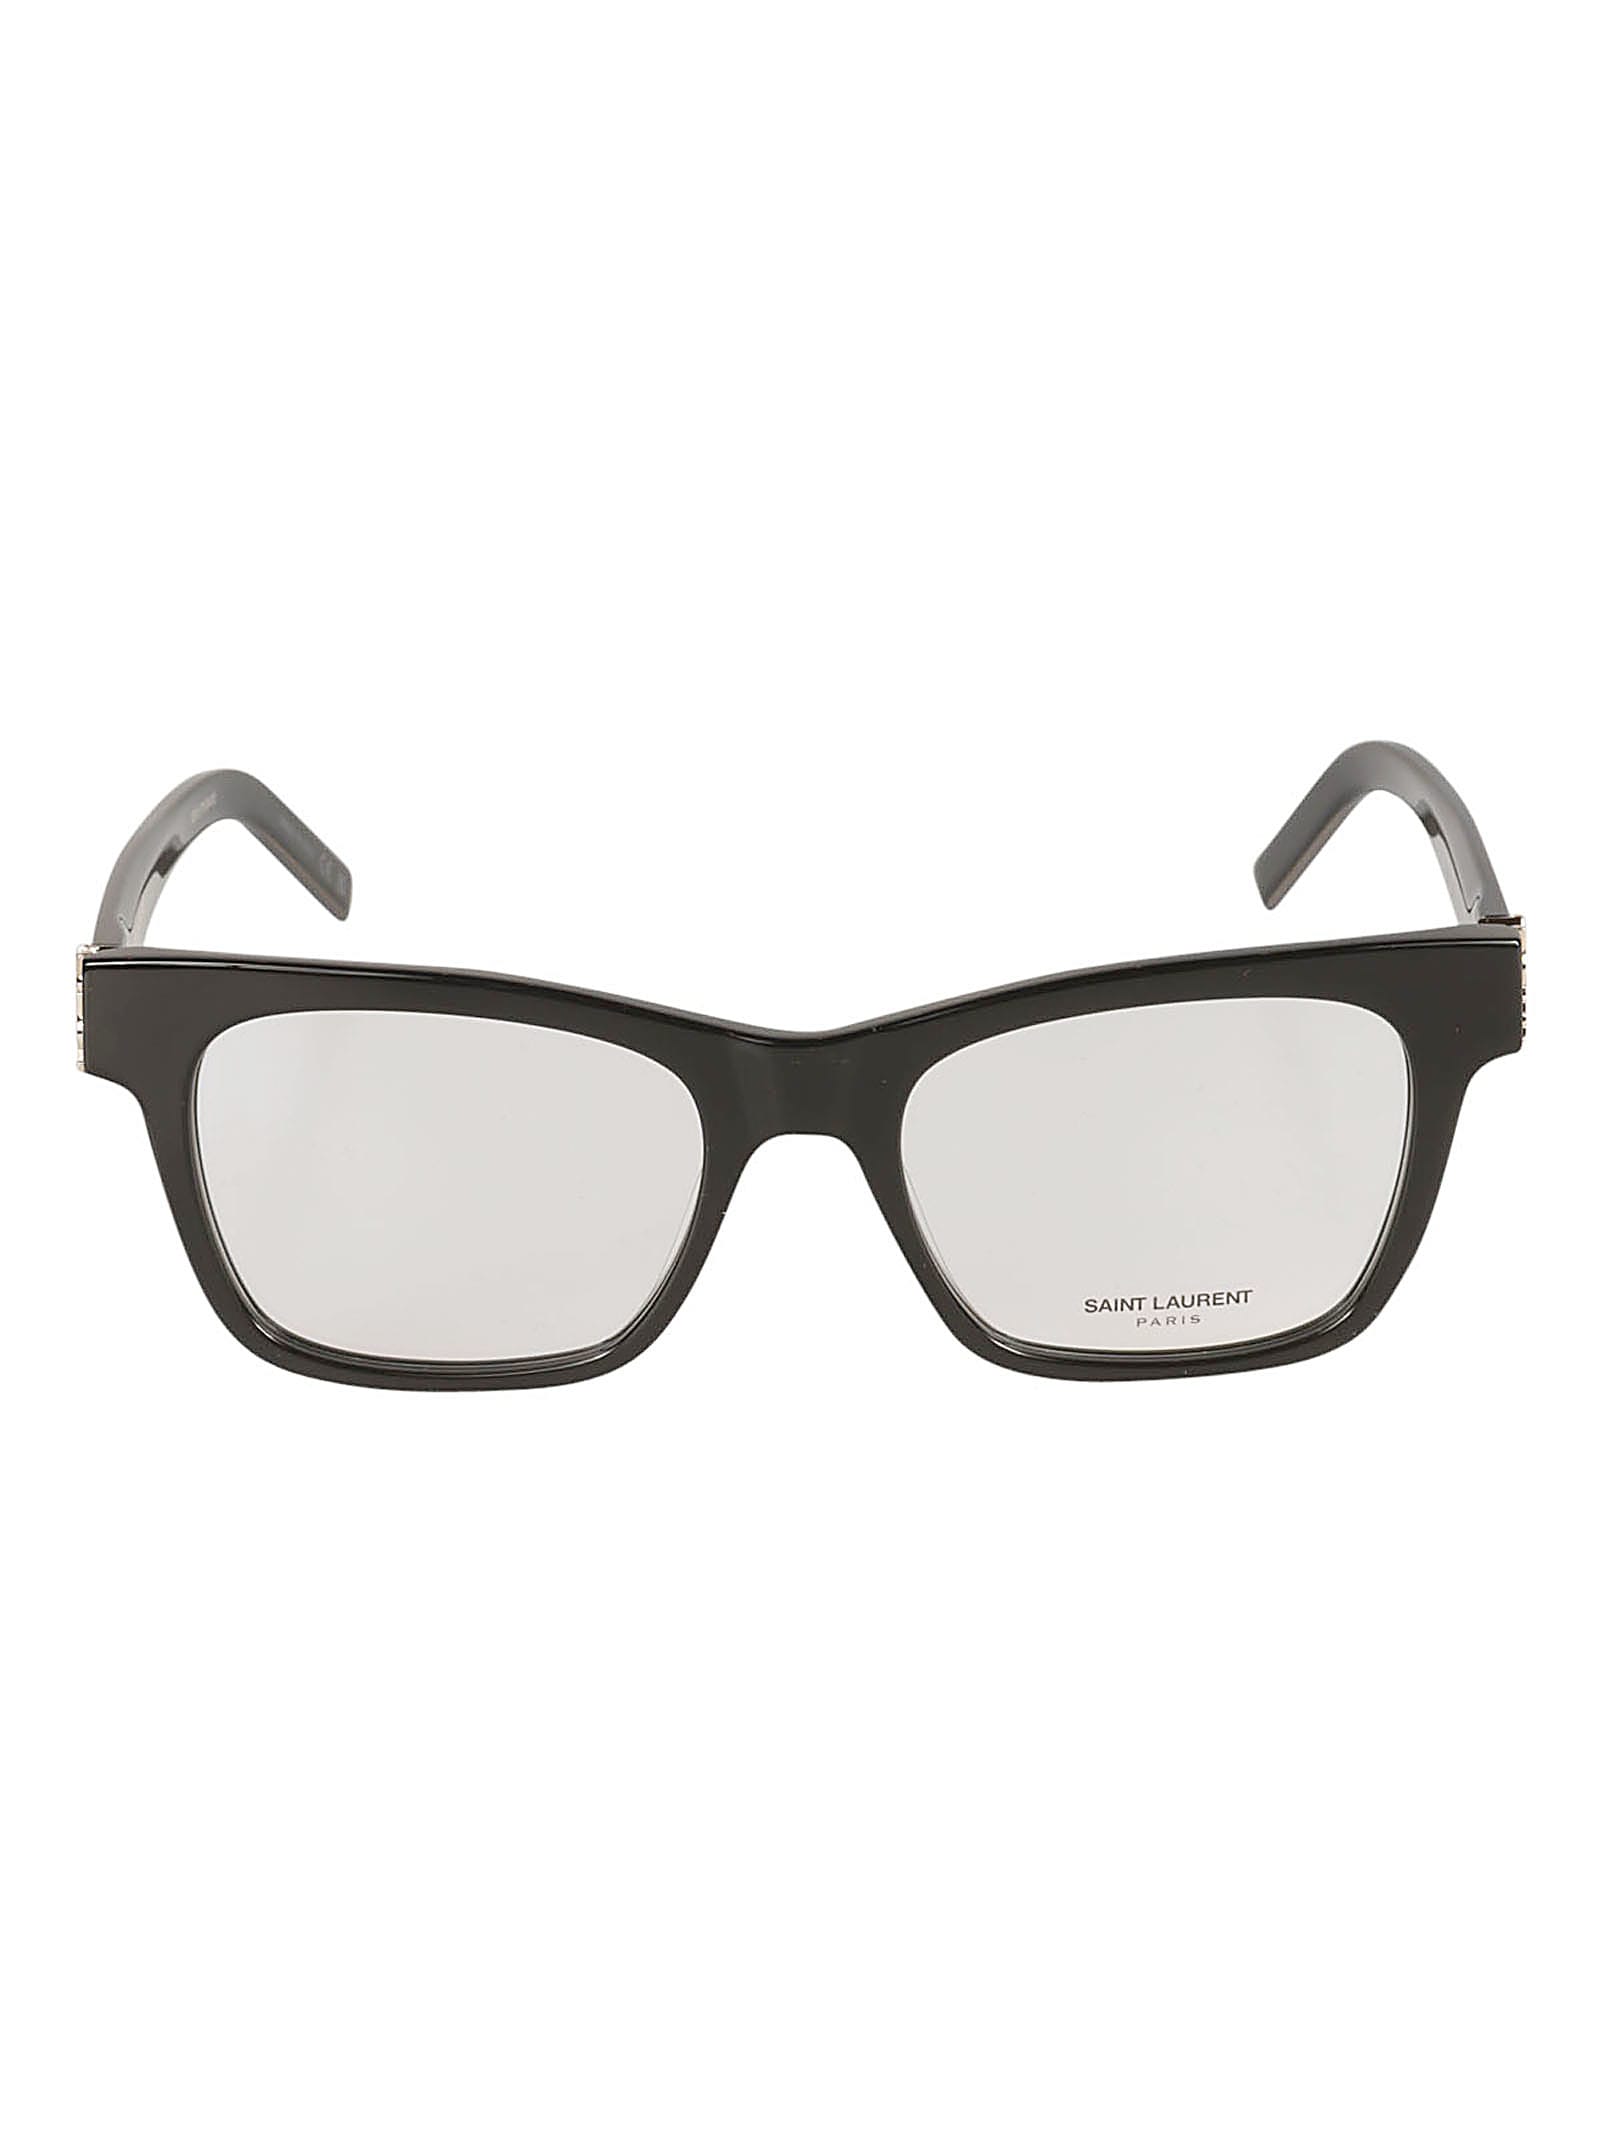 Saint Laurent Ysl Hinge Square Frame Glasses In Black/transparent